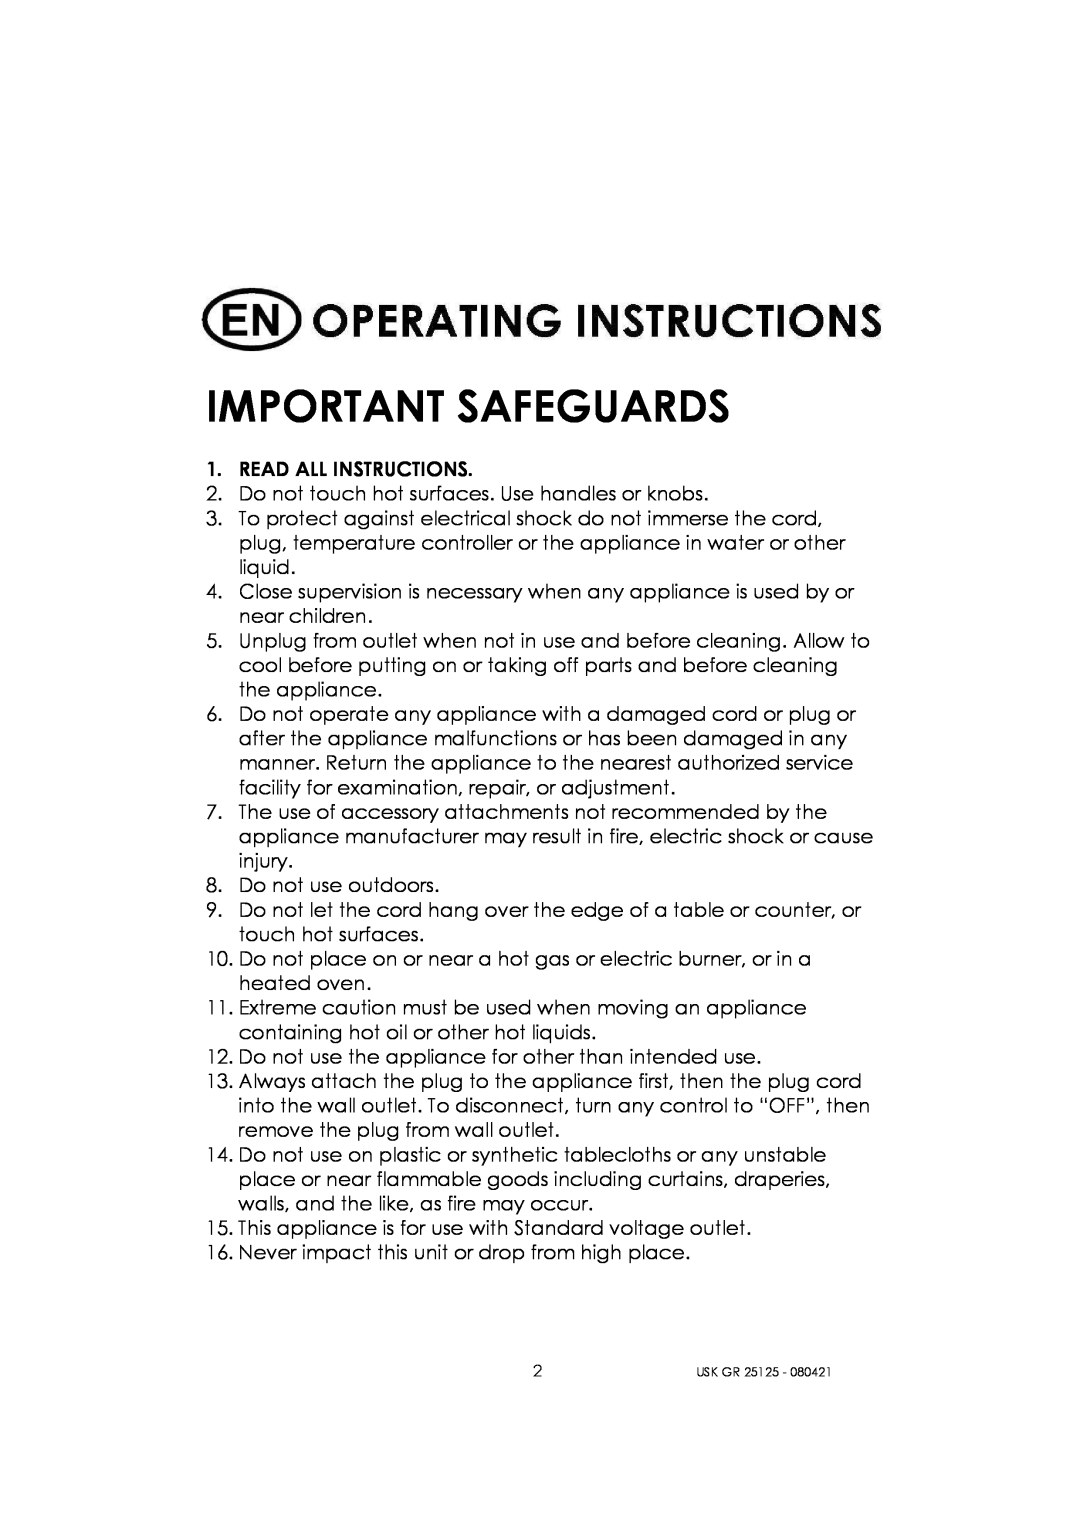 Kalorik USK GR 25125 manual Important Safeguards 